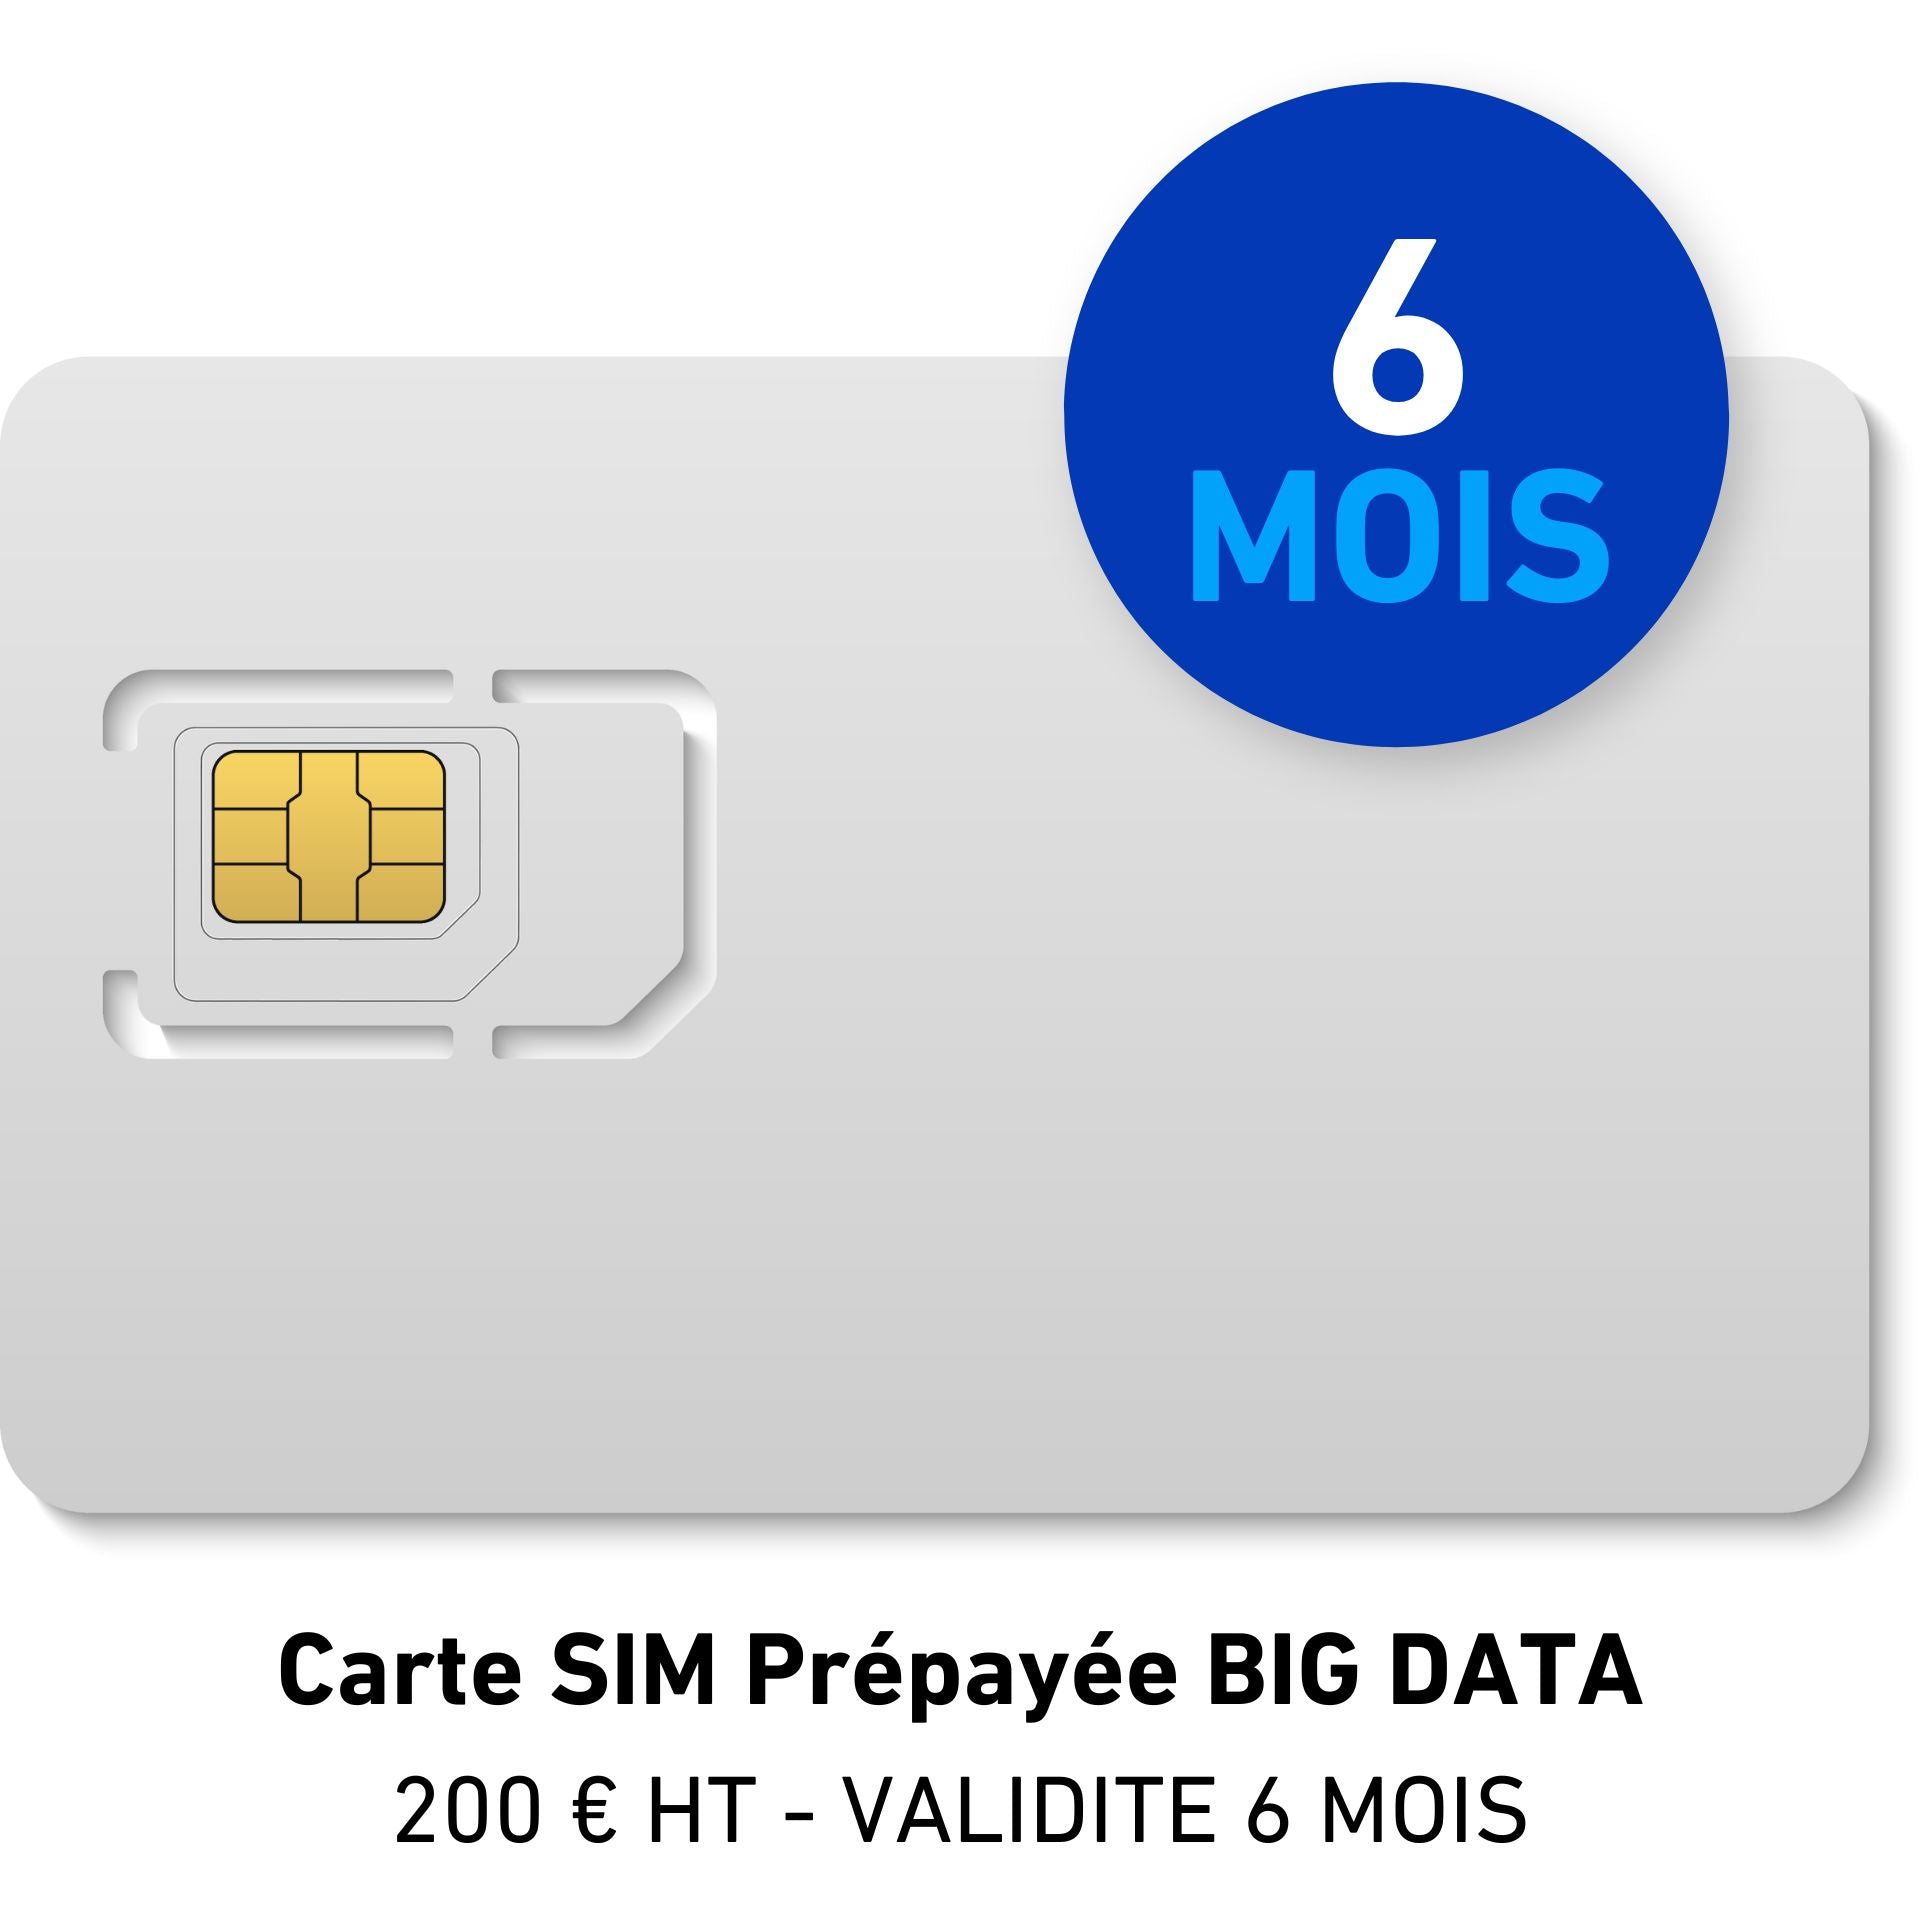 Carte SIM Prépayée BIG DATA 200 € HT - VALIDITE 6 MOIS